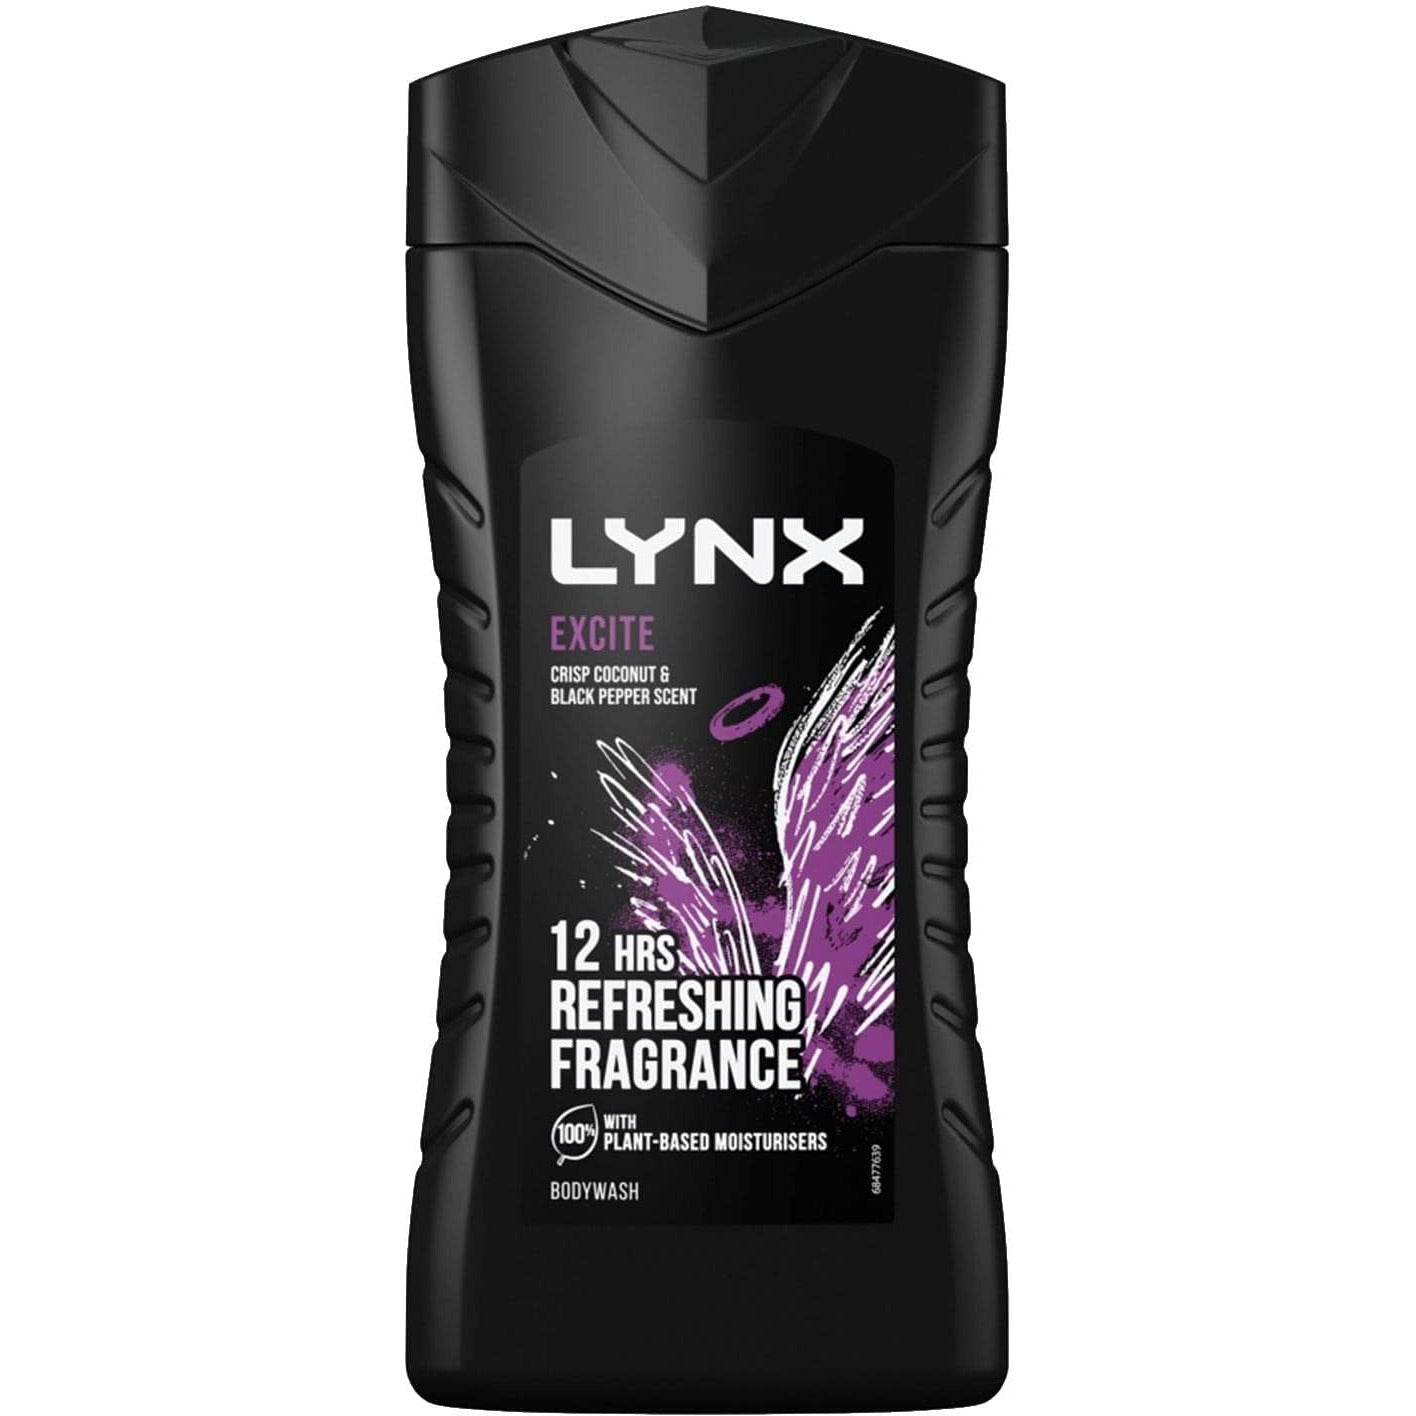 Lynx Bodywash Excite - Dollars and Sense